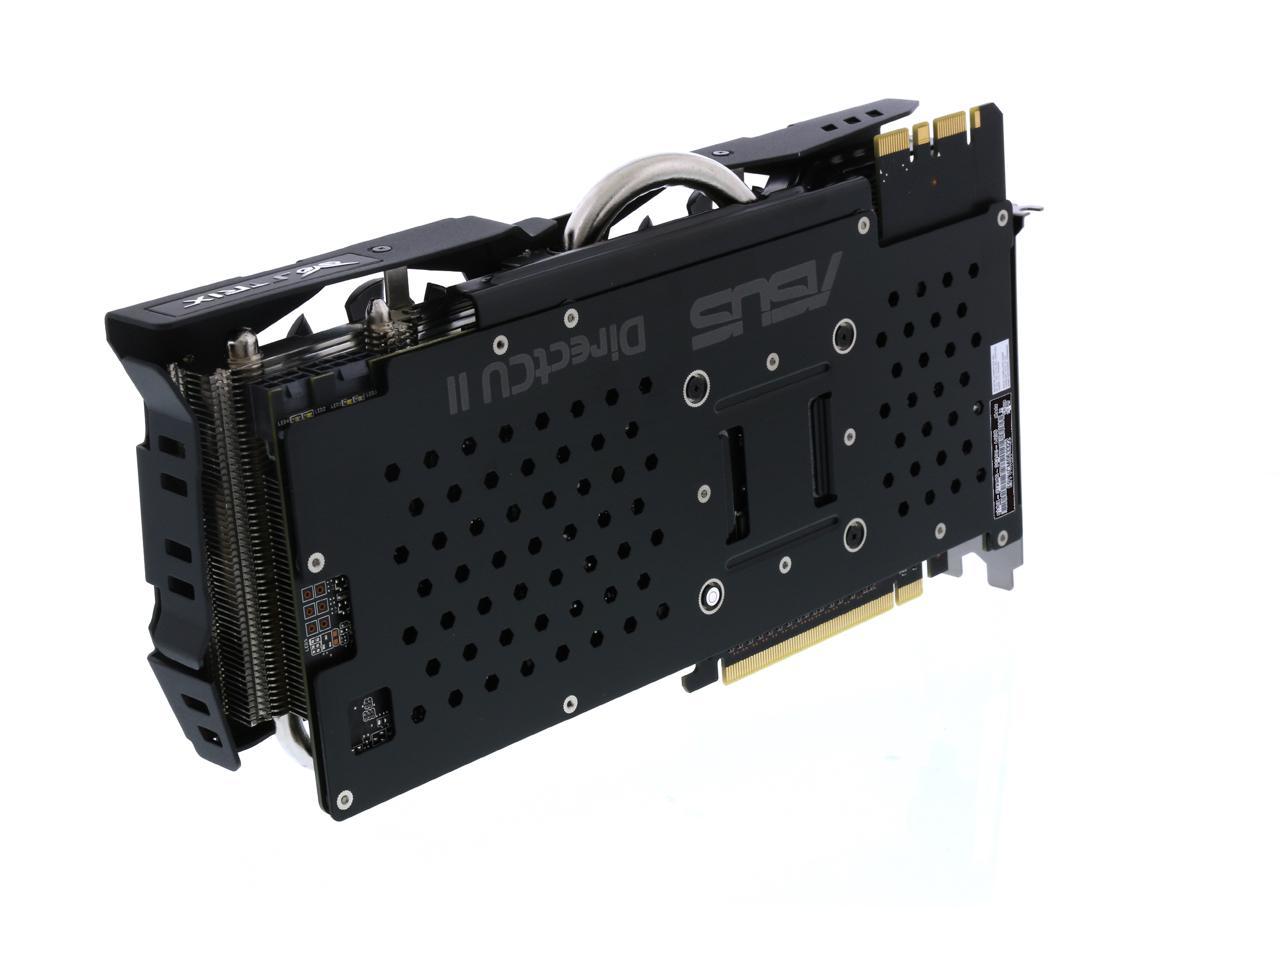 ASUS GeForce GTX 980 4GB GDDR5 PCI Express 3.0 SLI Support Video Card  STRIX-GTX980-DC2OC-4GD5